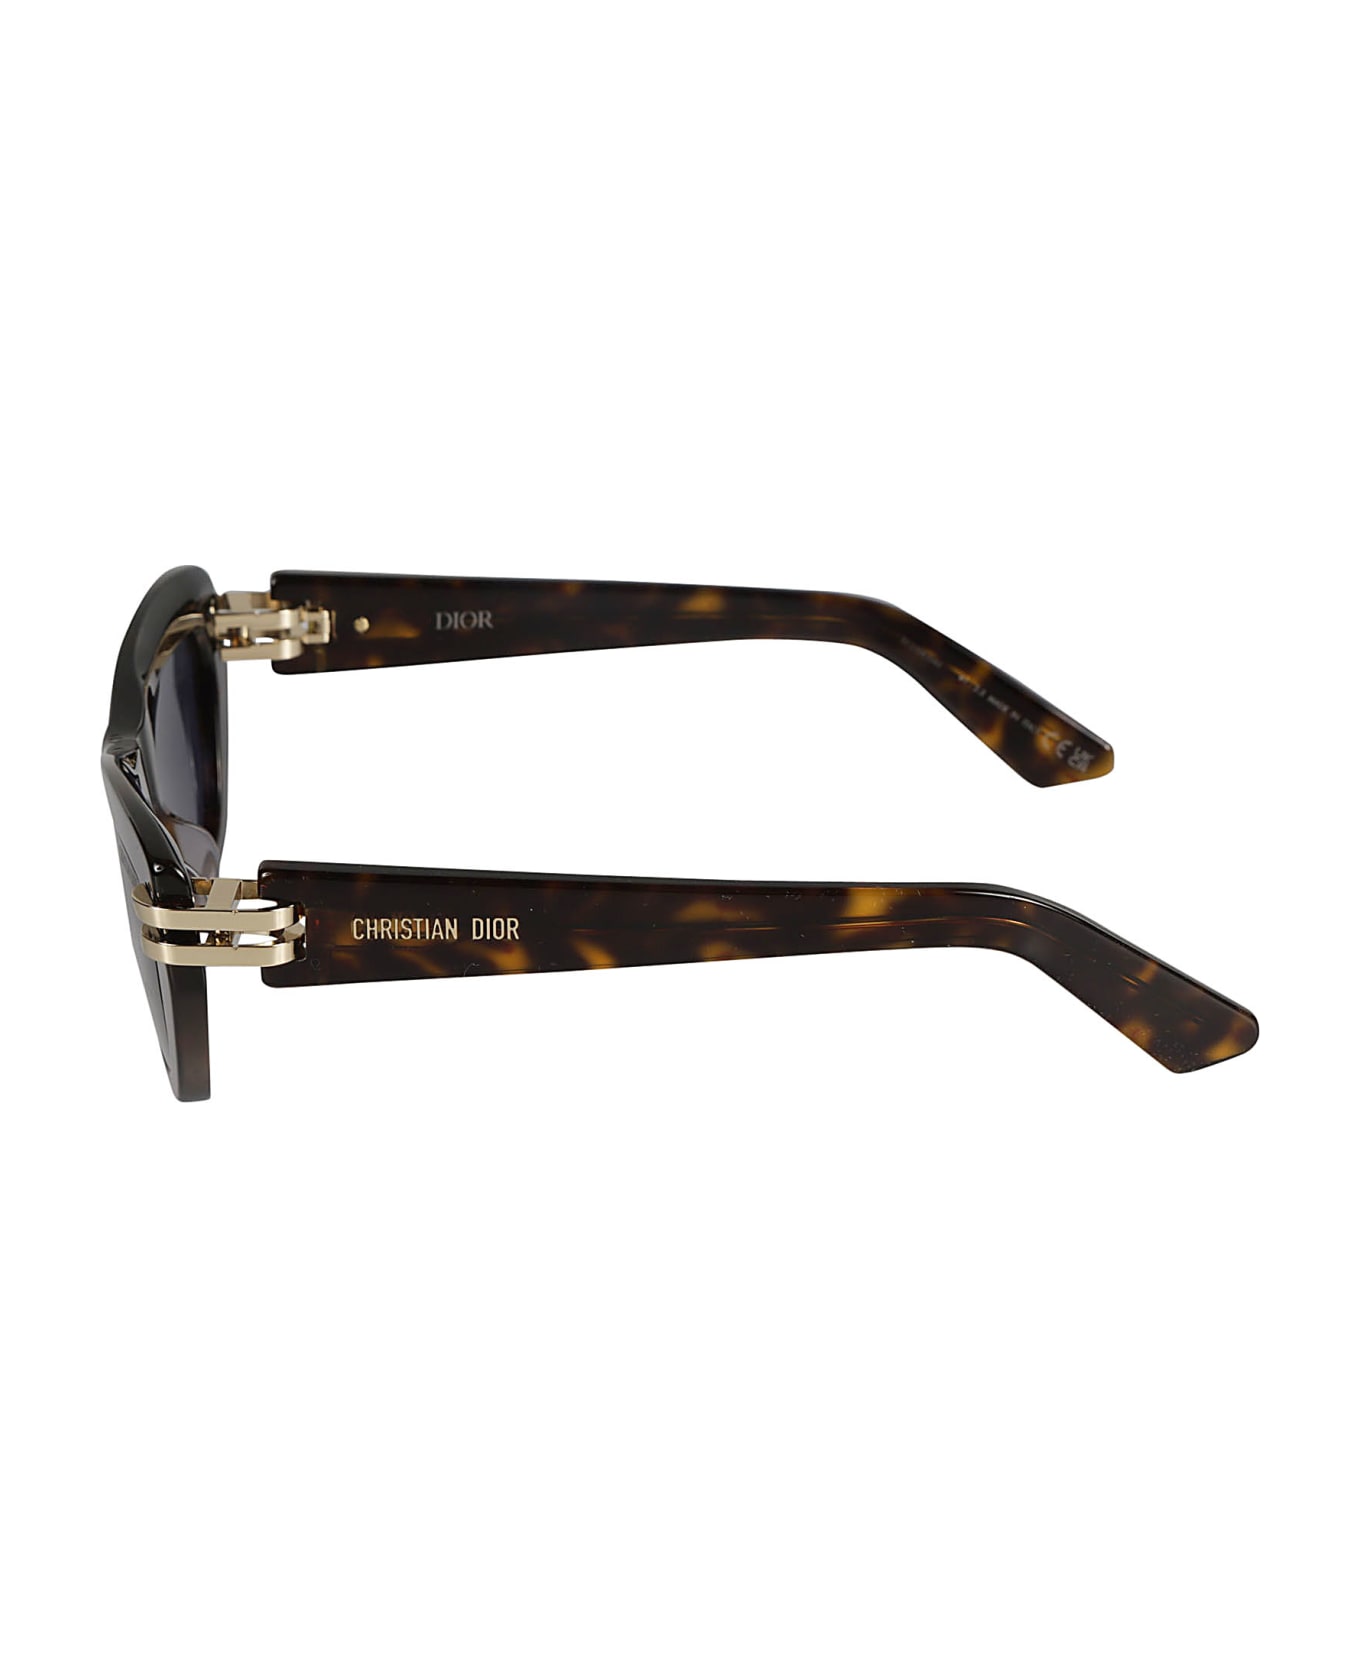 Dior Eyewear Cdior Sunglasses - 20b0 サングラス